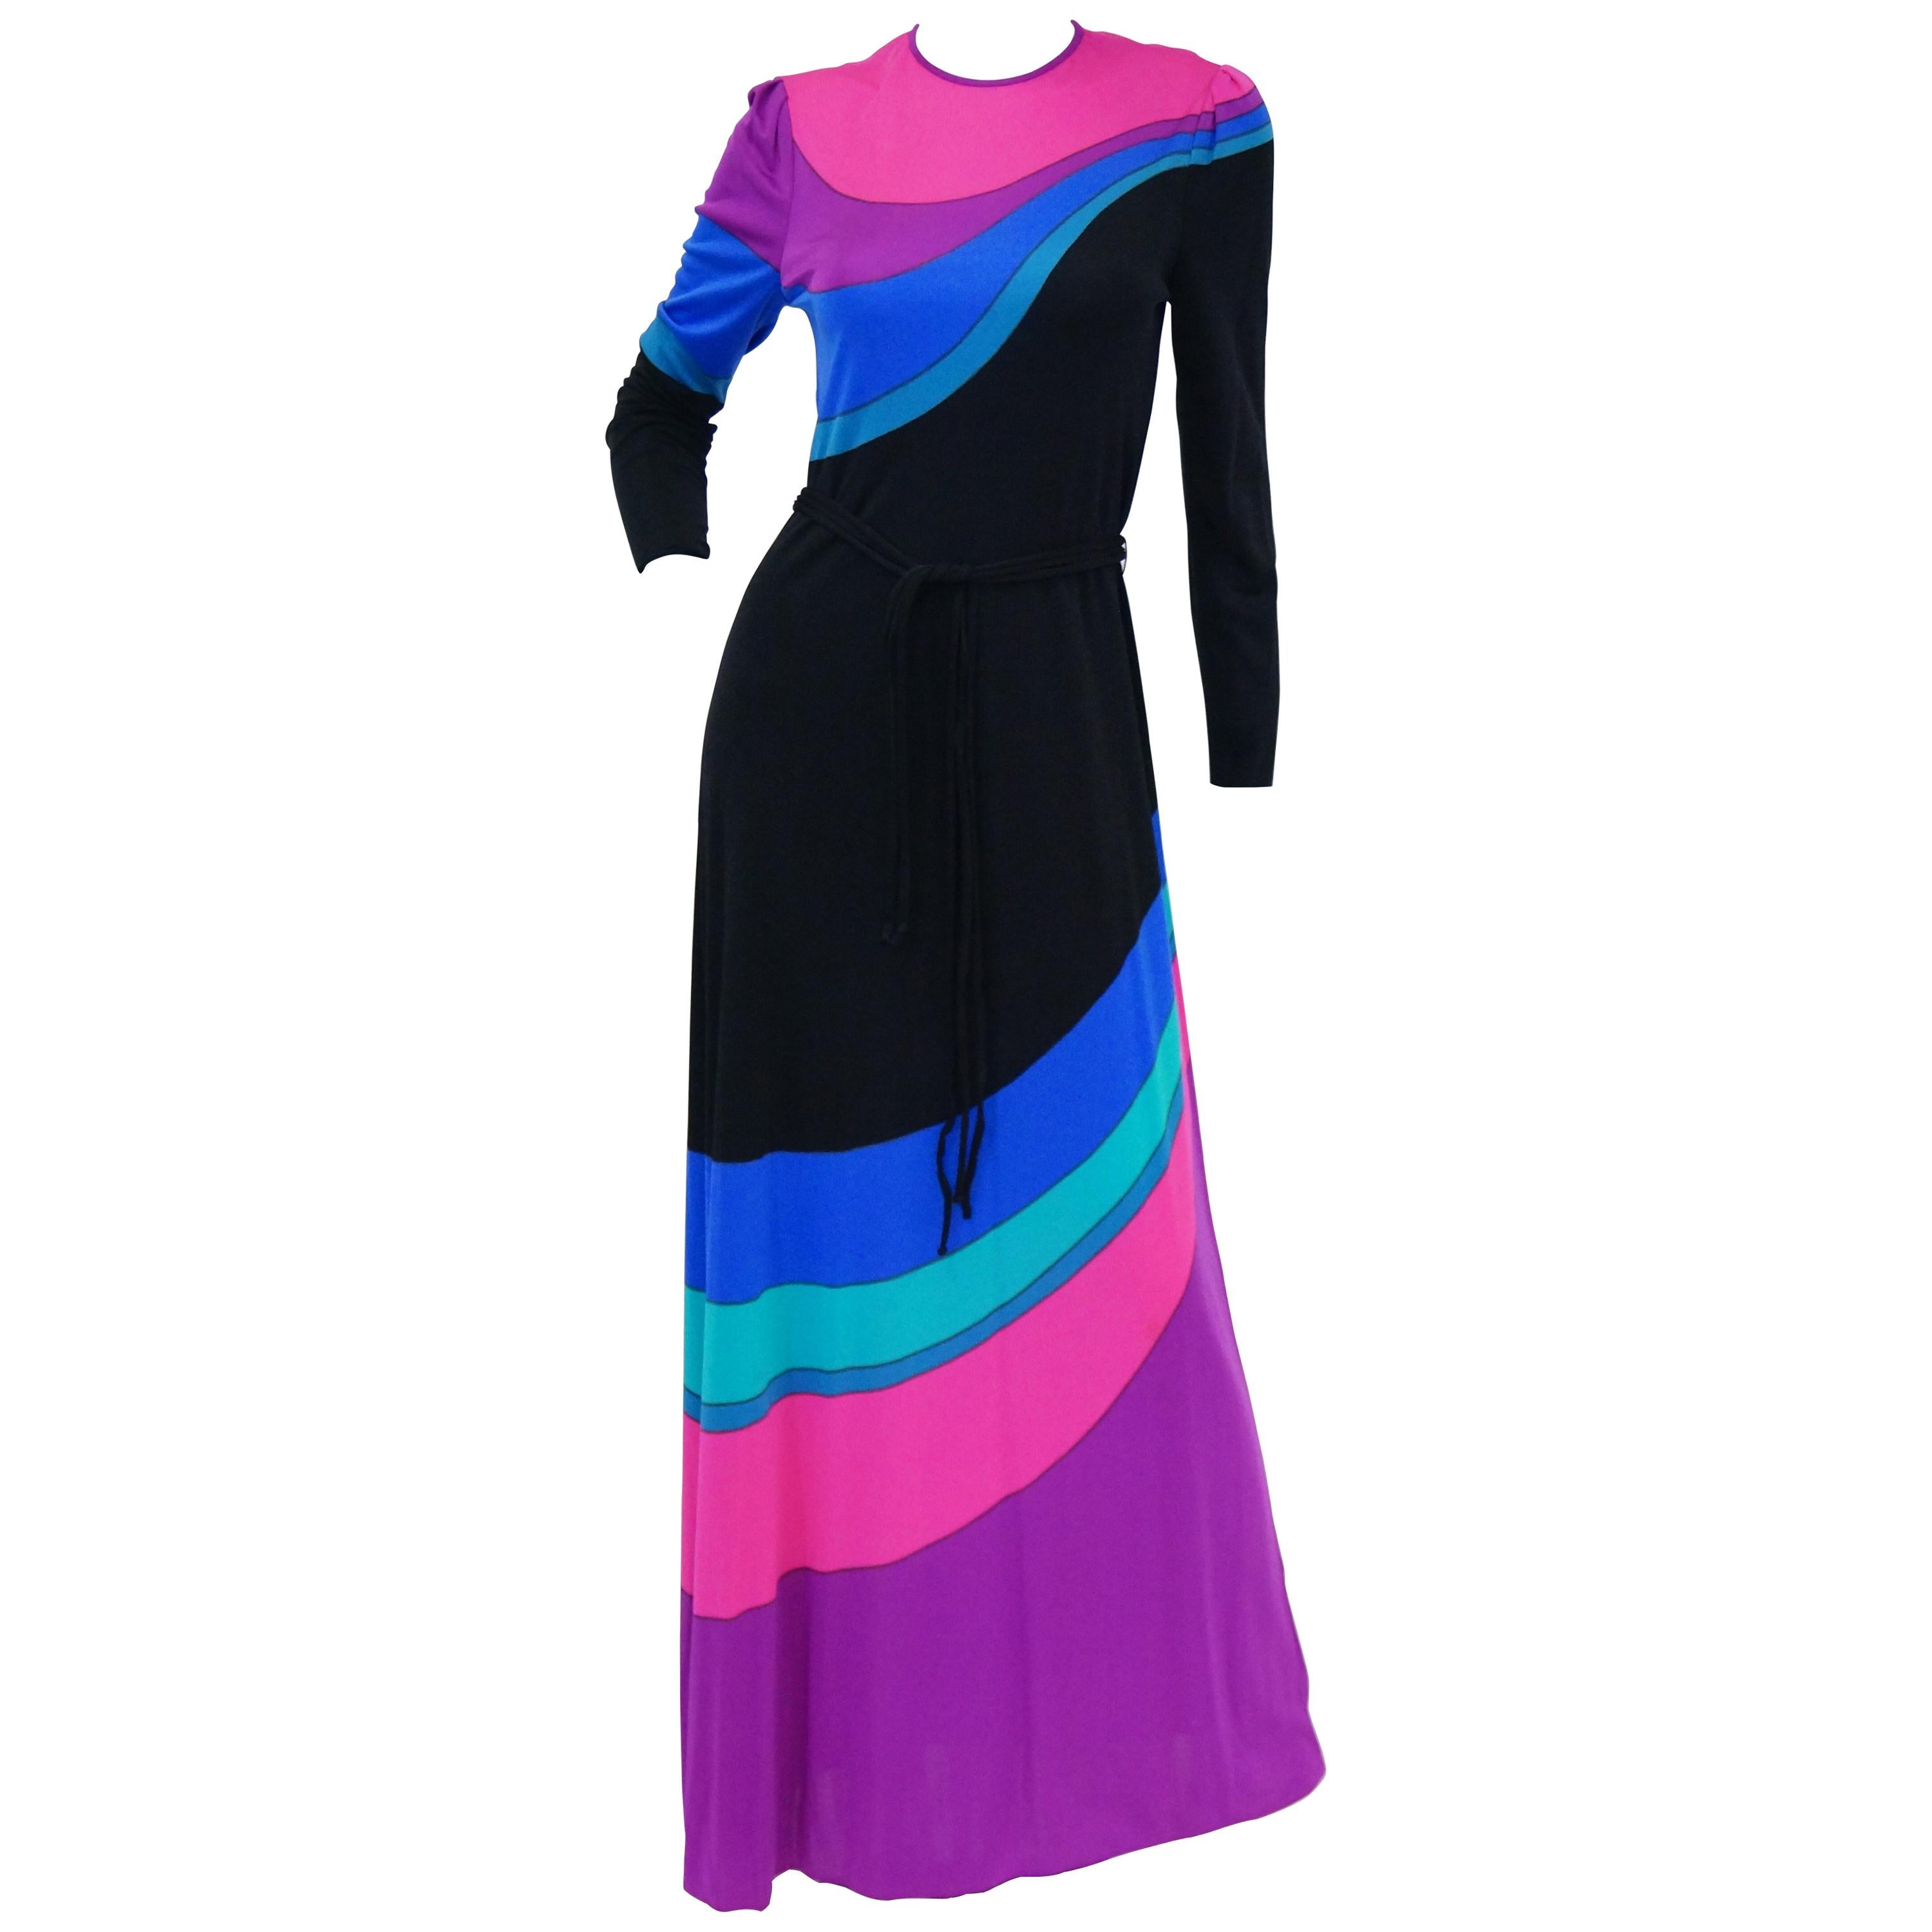  1970s Louis Feraud Vibrant Graphic Pink Blue and Black Swirl Knit Maxi Dress